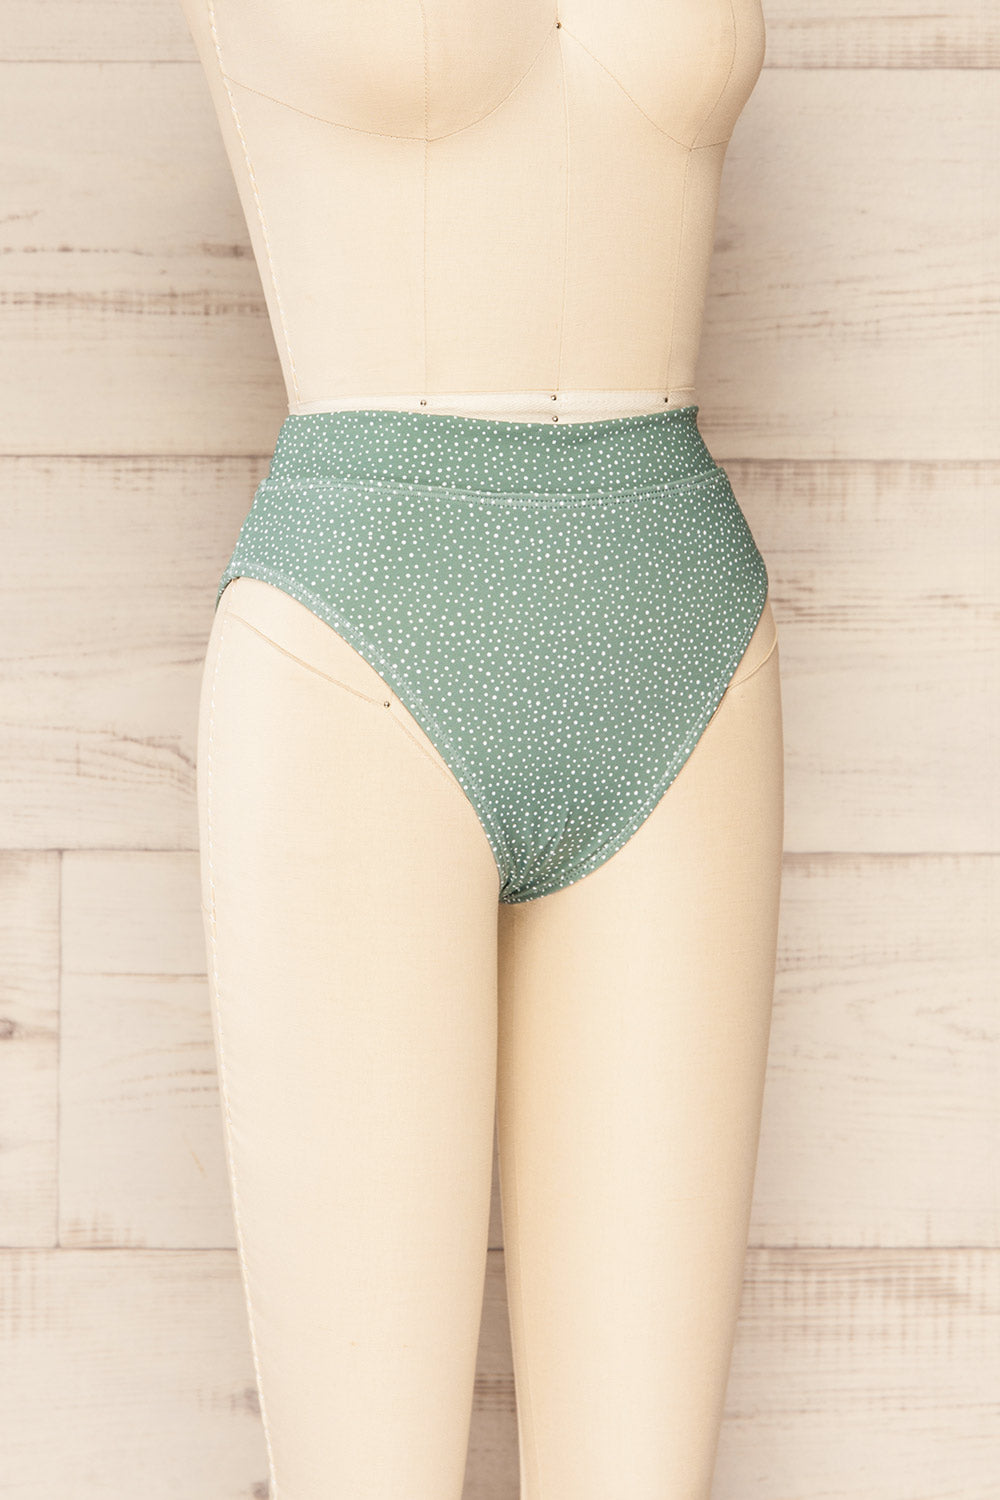 Palic Green High-Waisted Polka Dot Bikini Bottom | La petite garçonne side view 